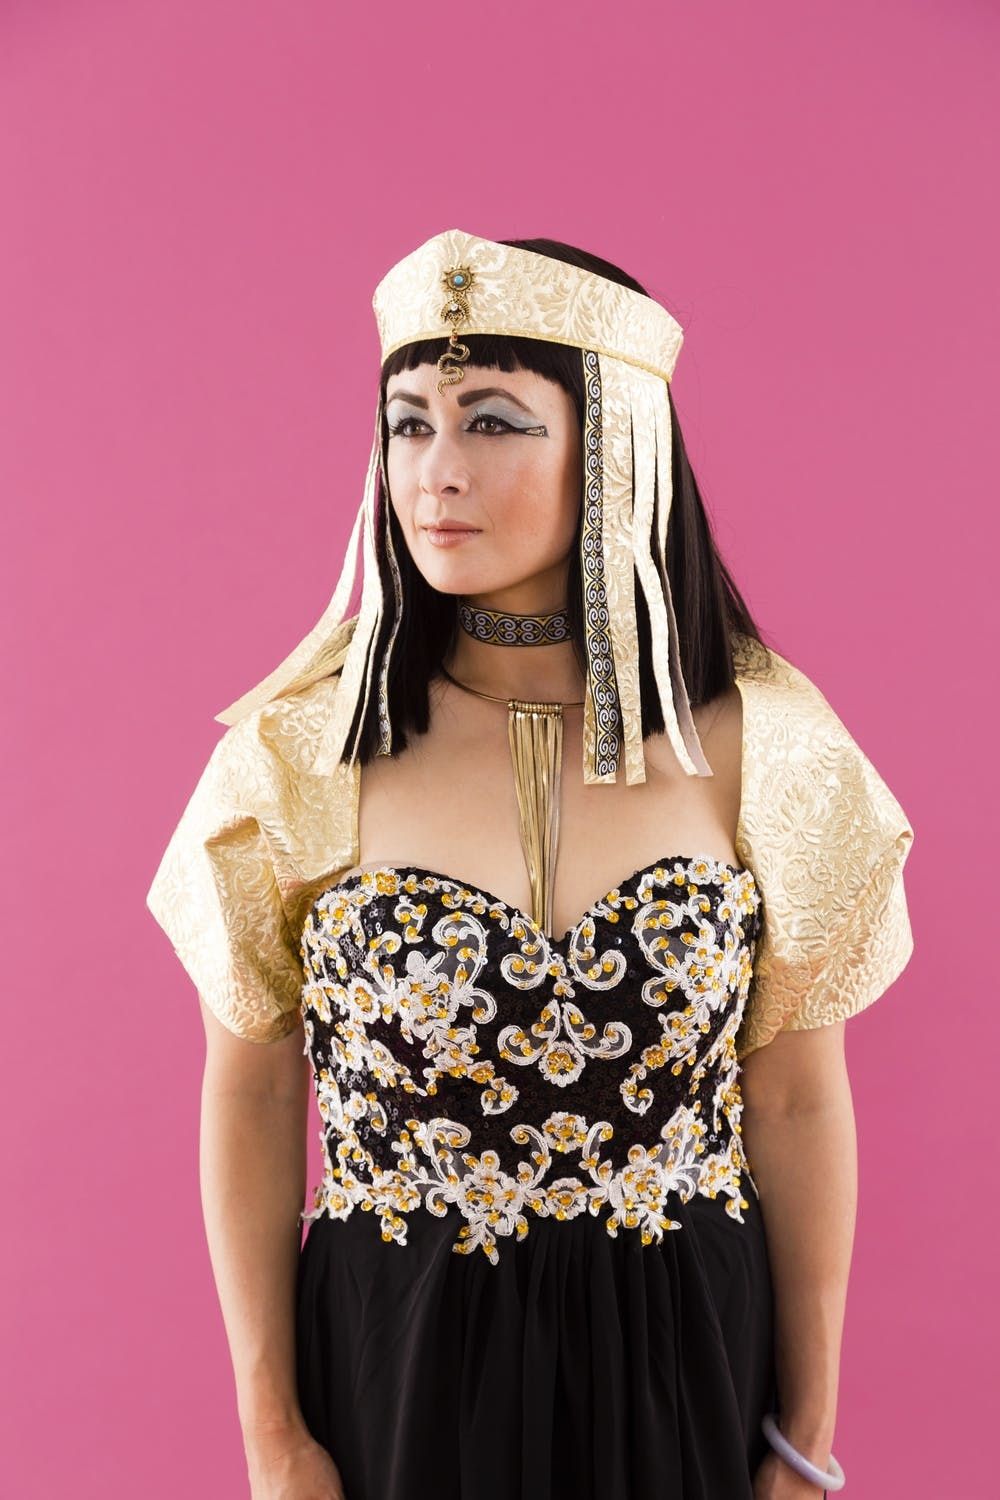 sexy egyptian costume diy